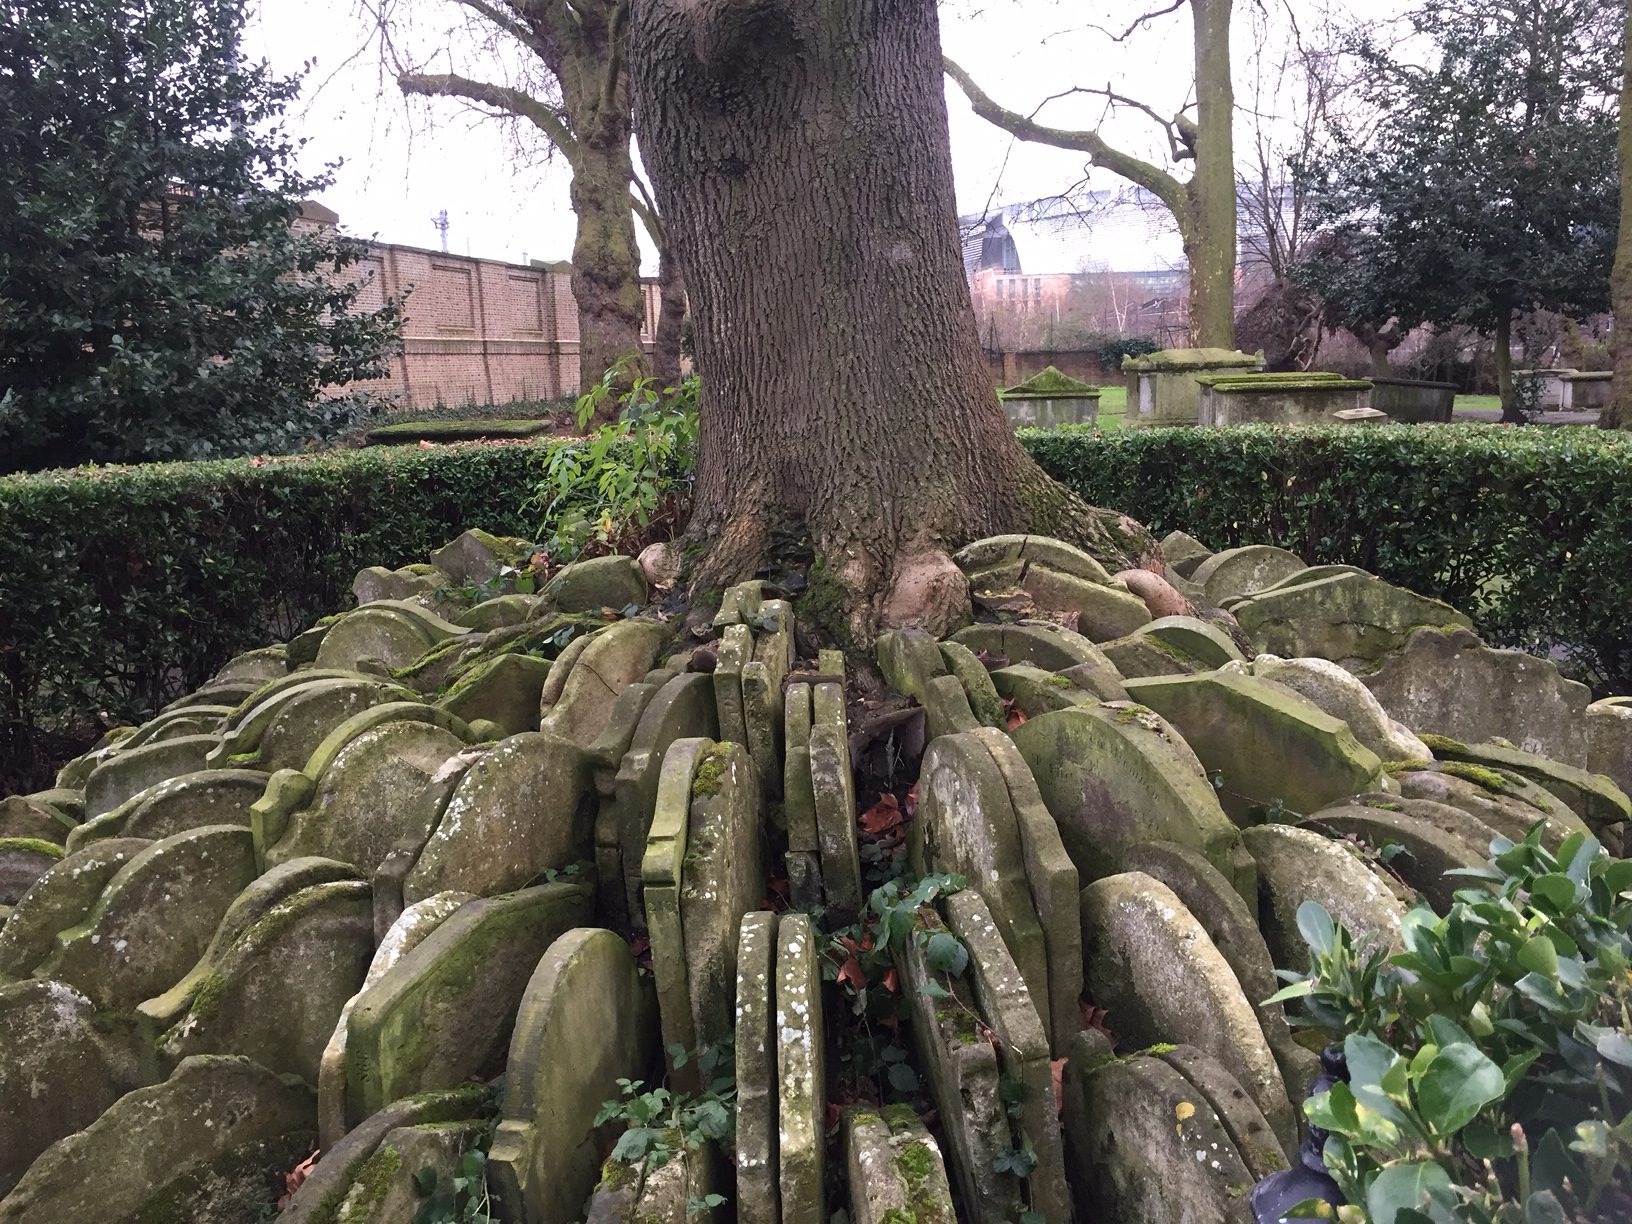 Continental Railway Journeys: The Thomas Hardy tree and gravestones.